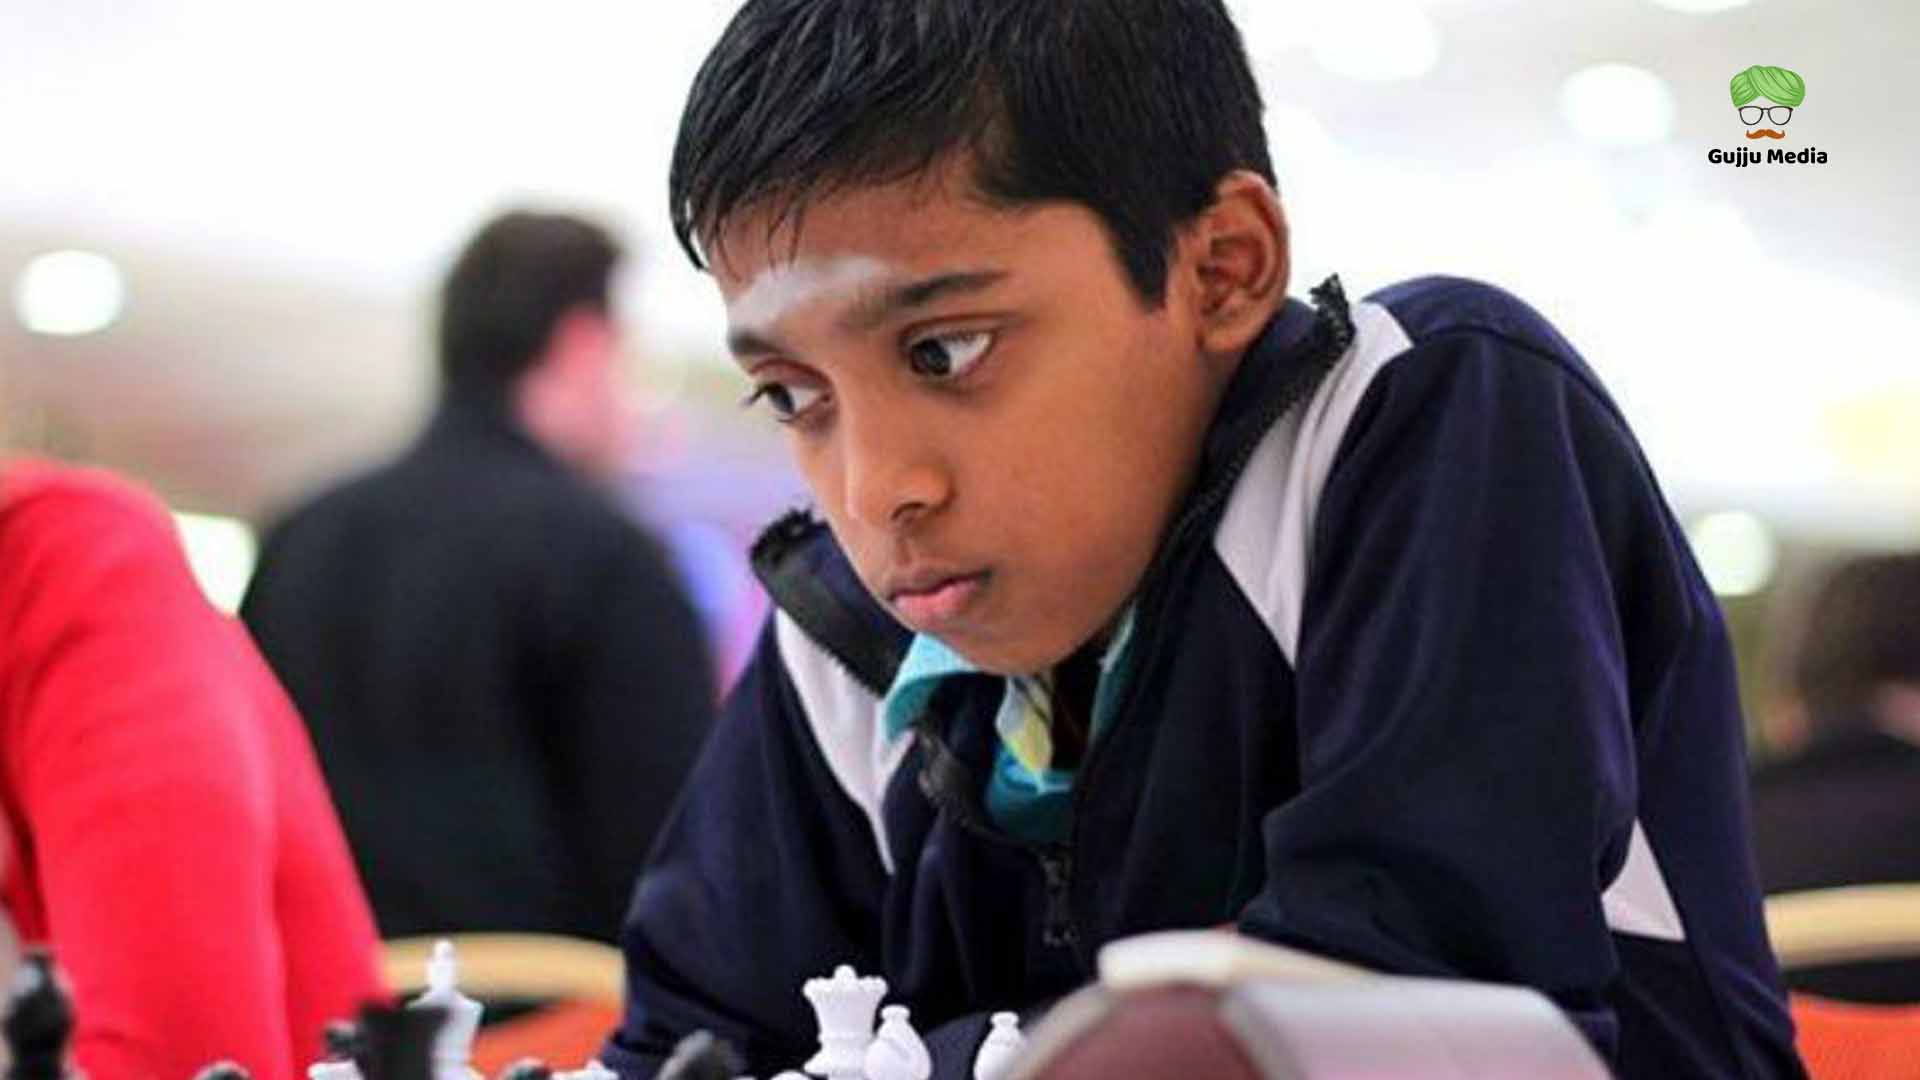 At 12 yrs 10 mths, Chennai boy is world's